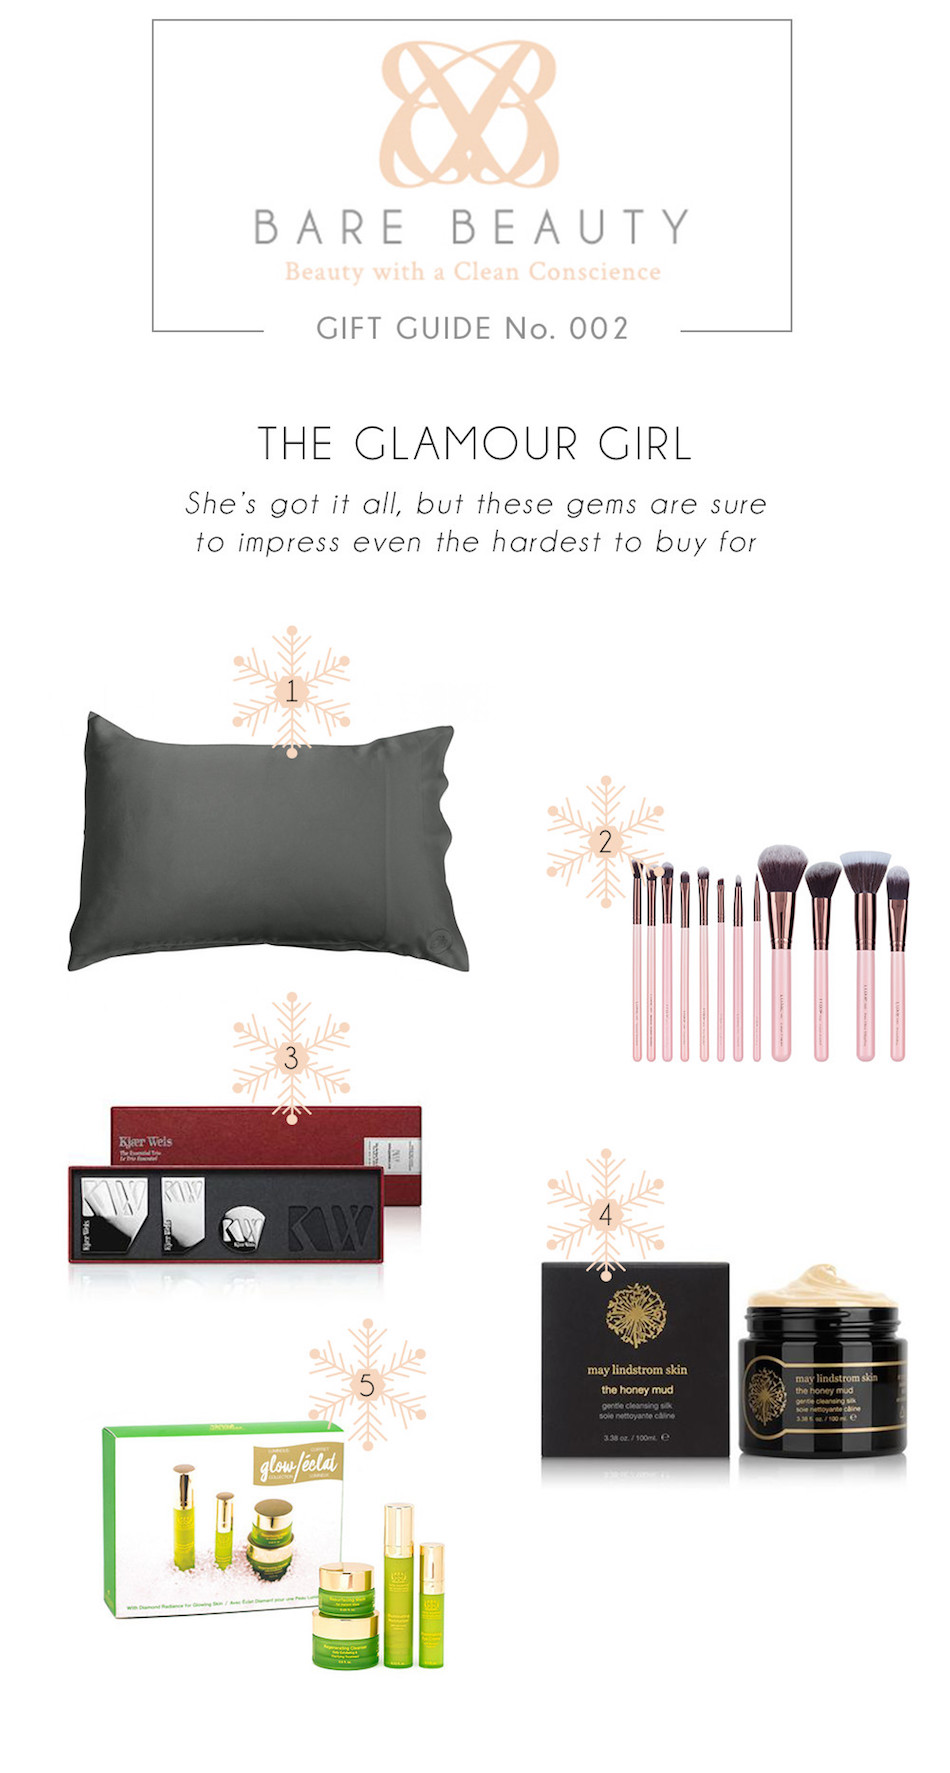 The Glamour Girl Gift Guide on barebeauty.com